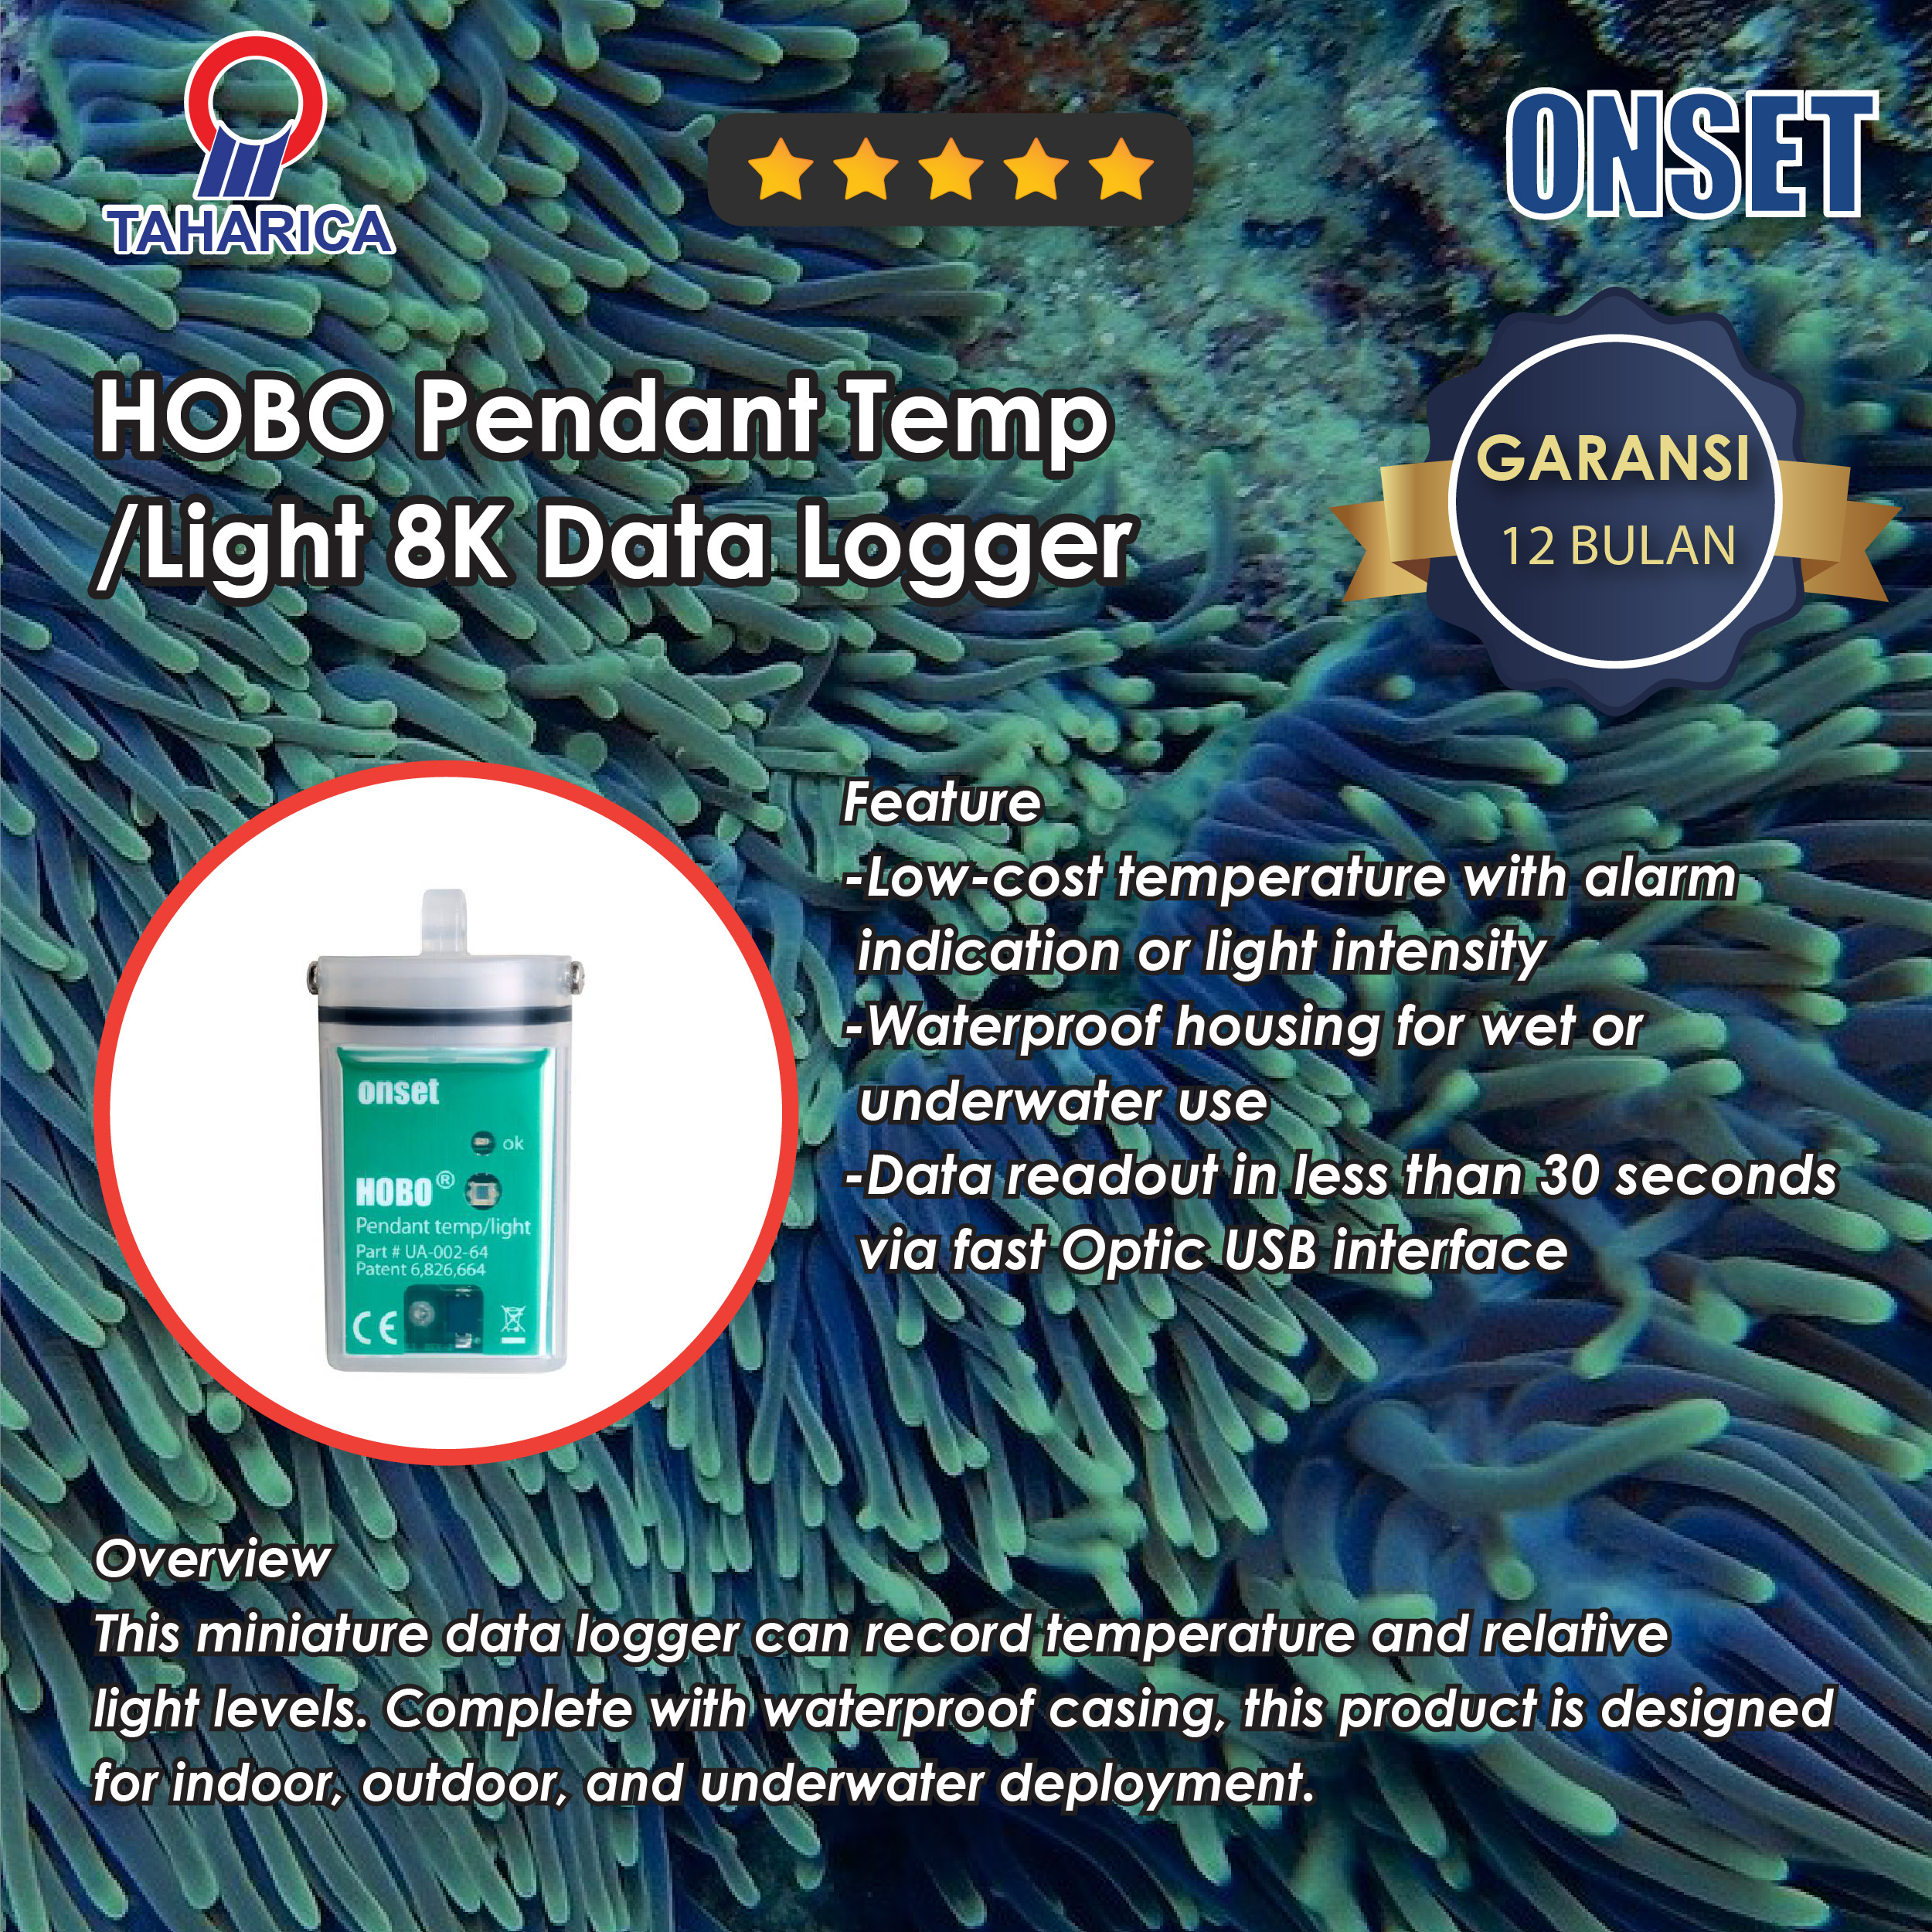 Hobo Pendant Temperature Light 8k Data